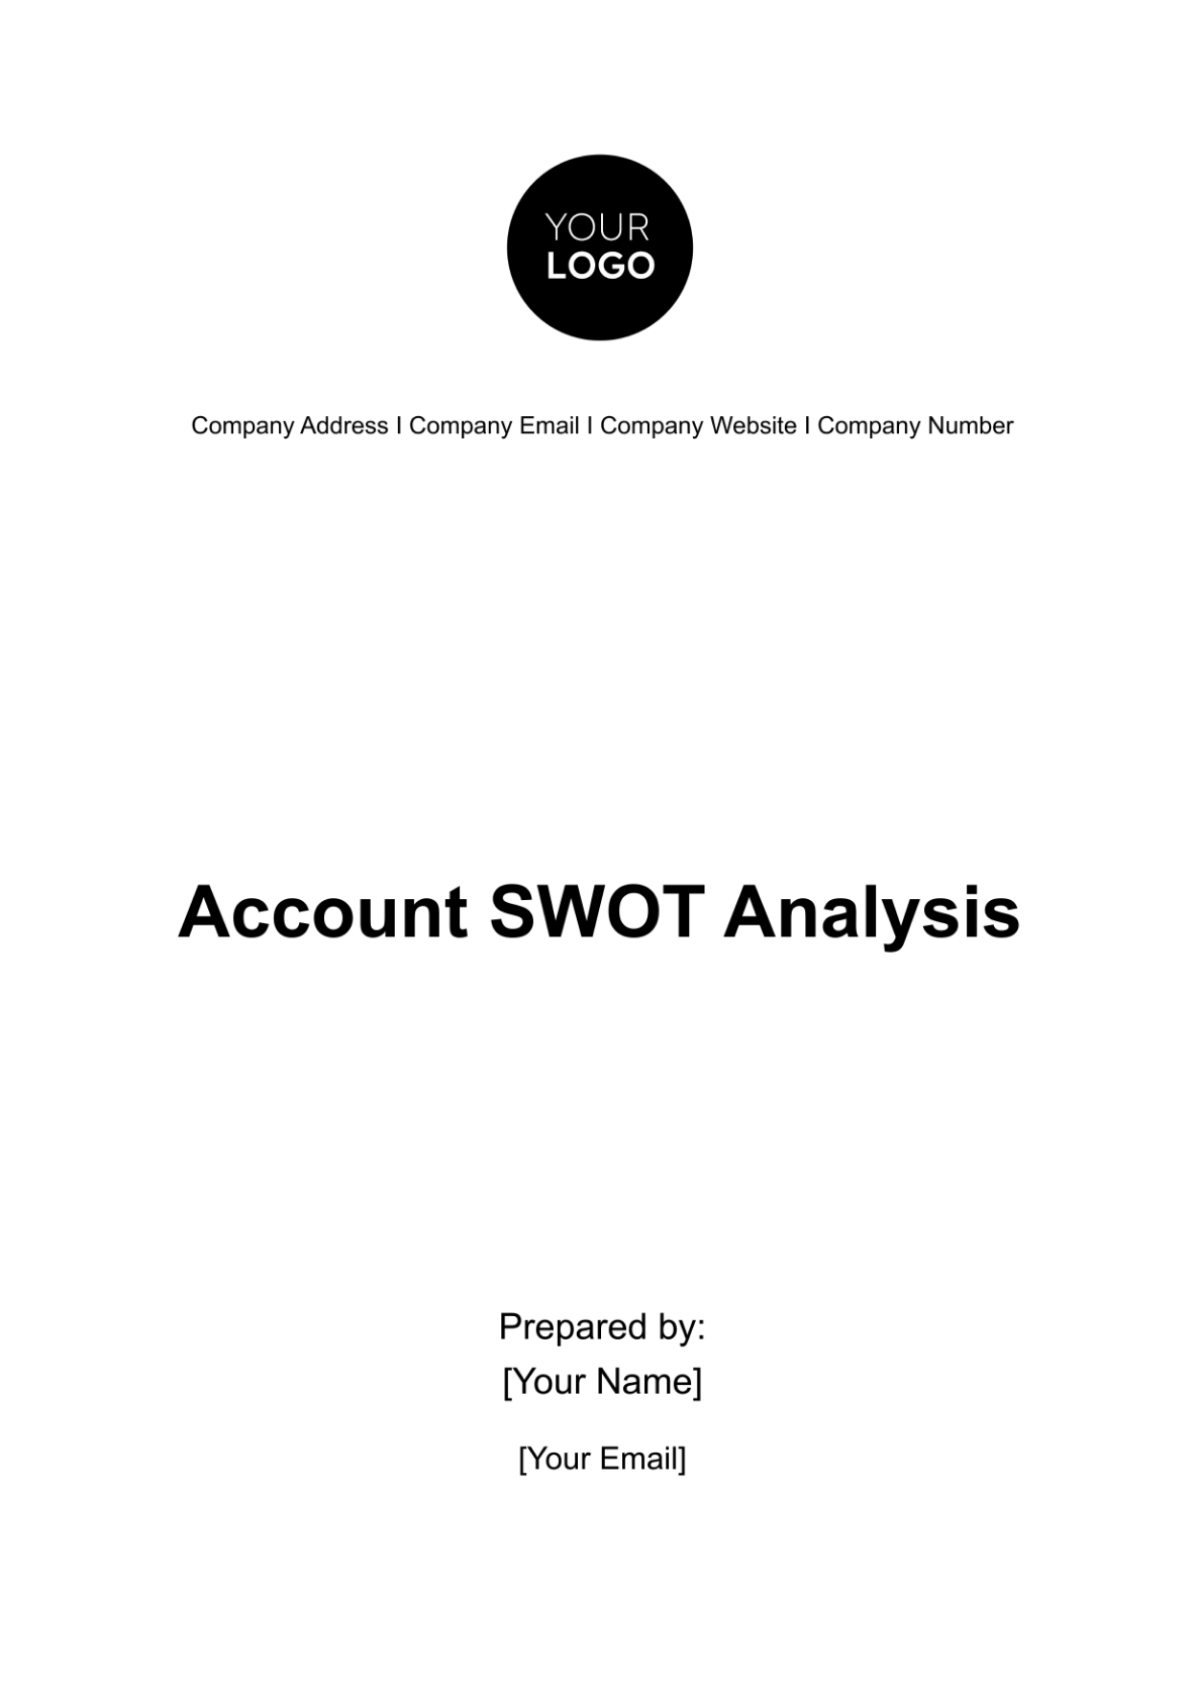 Account SWOT Analysis Template